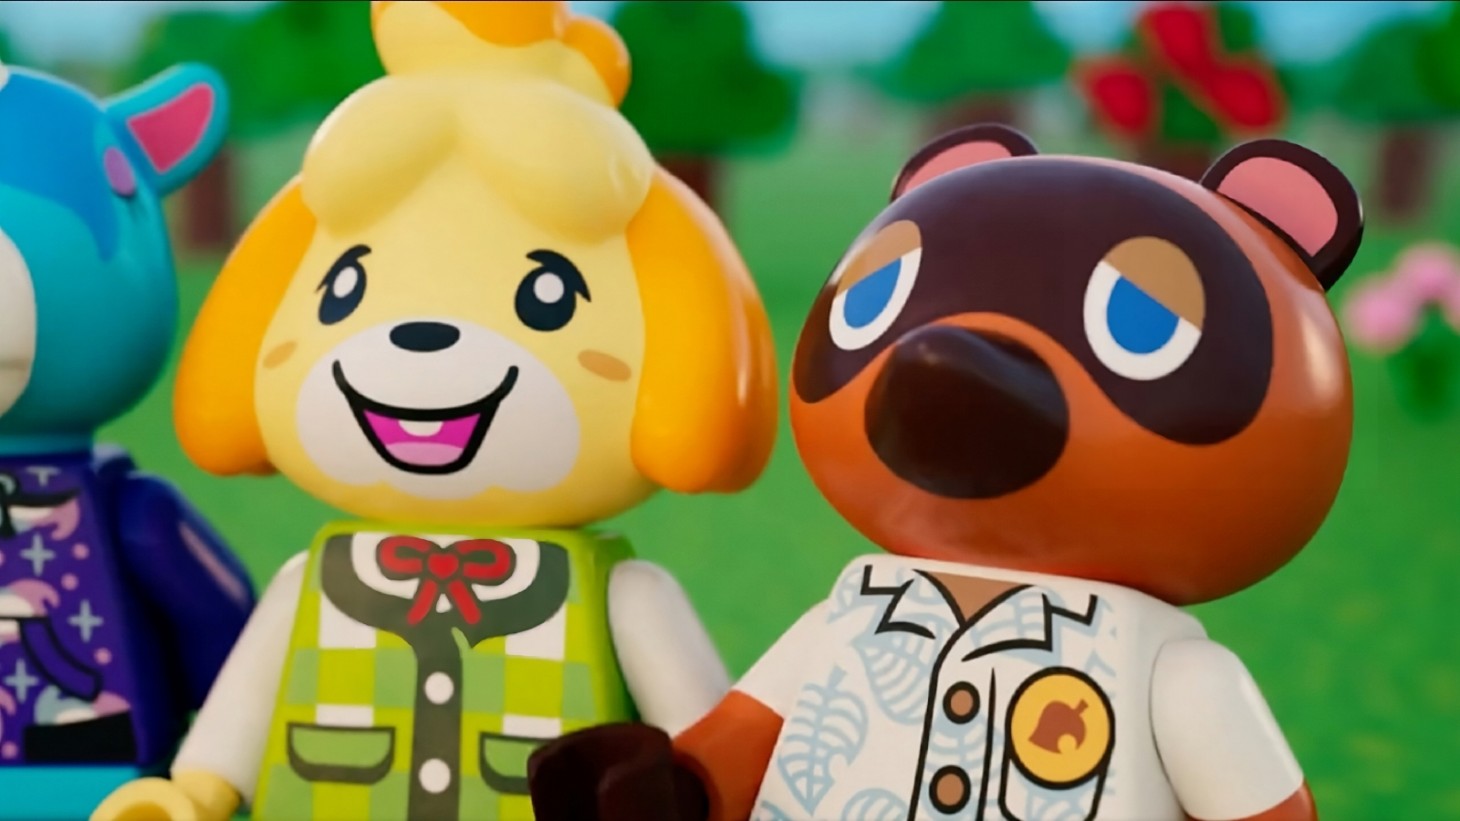 Animal Crossing Lego Nintendo Collaboration Teased Trailer